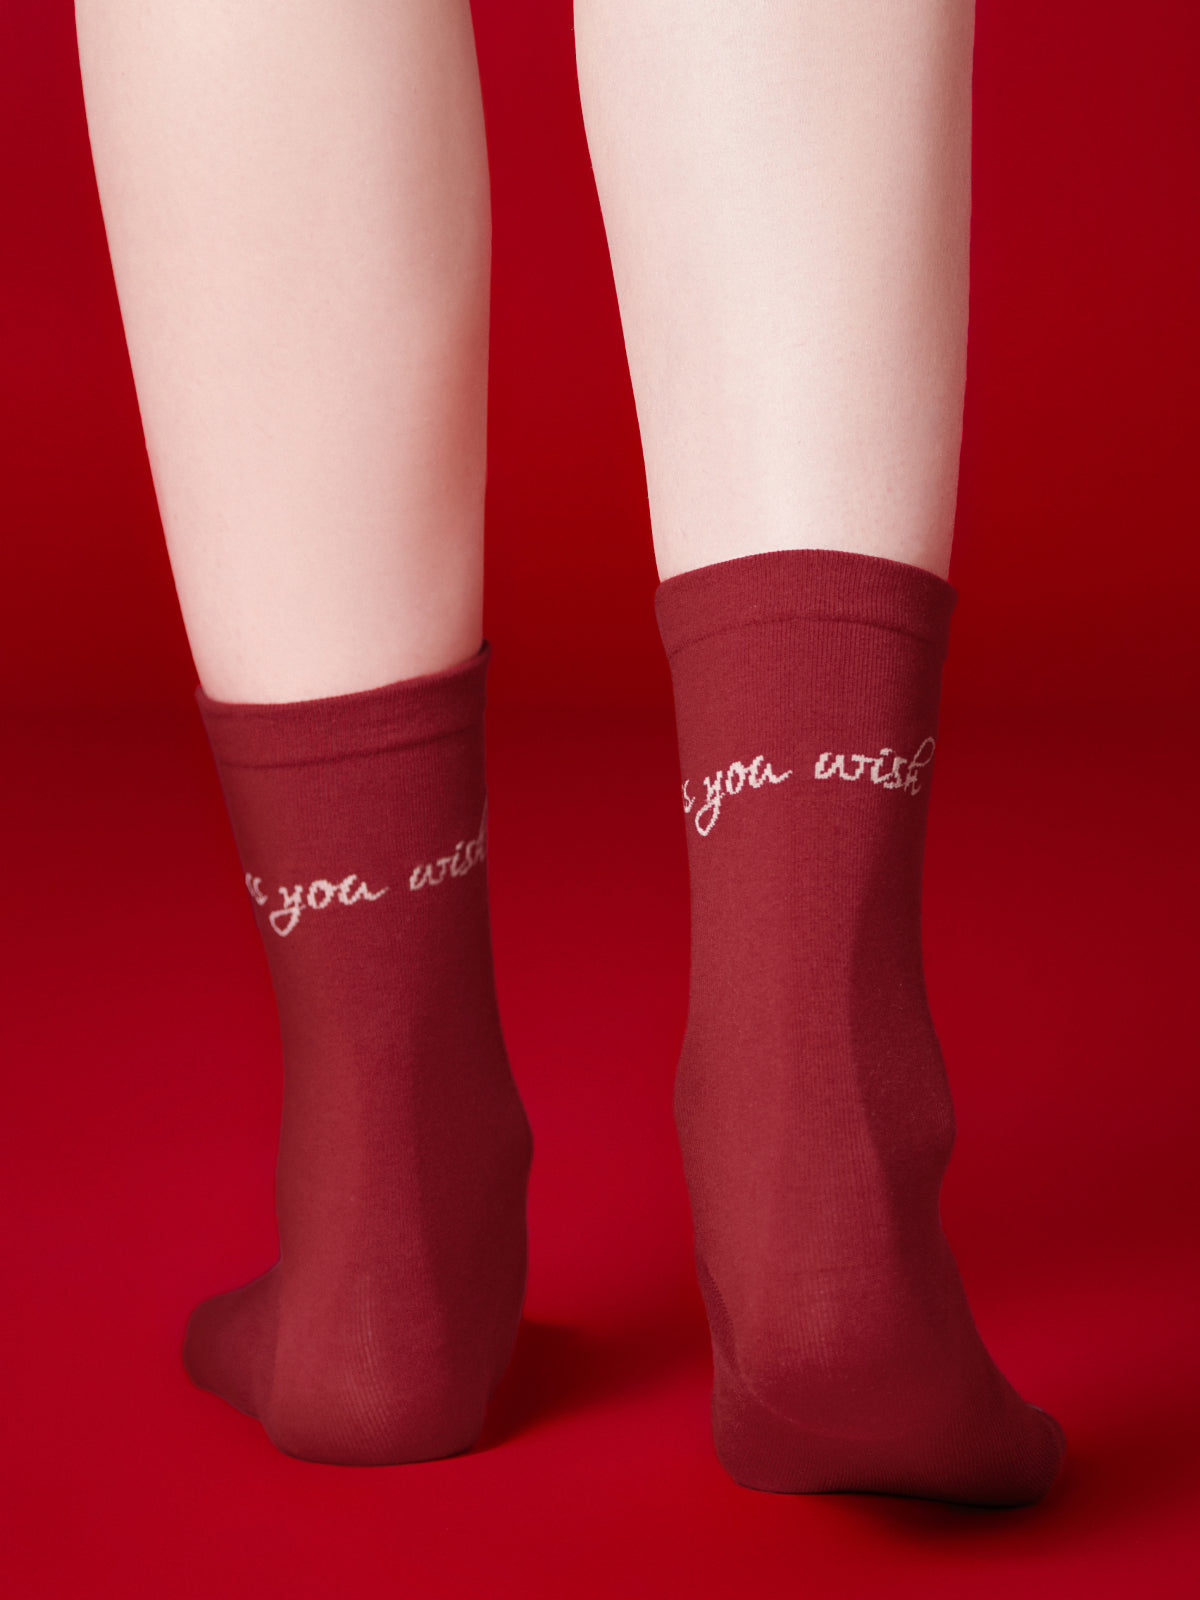 Make a Wish Limited Edition Cotton Socks